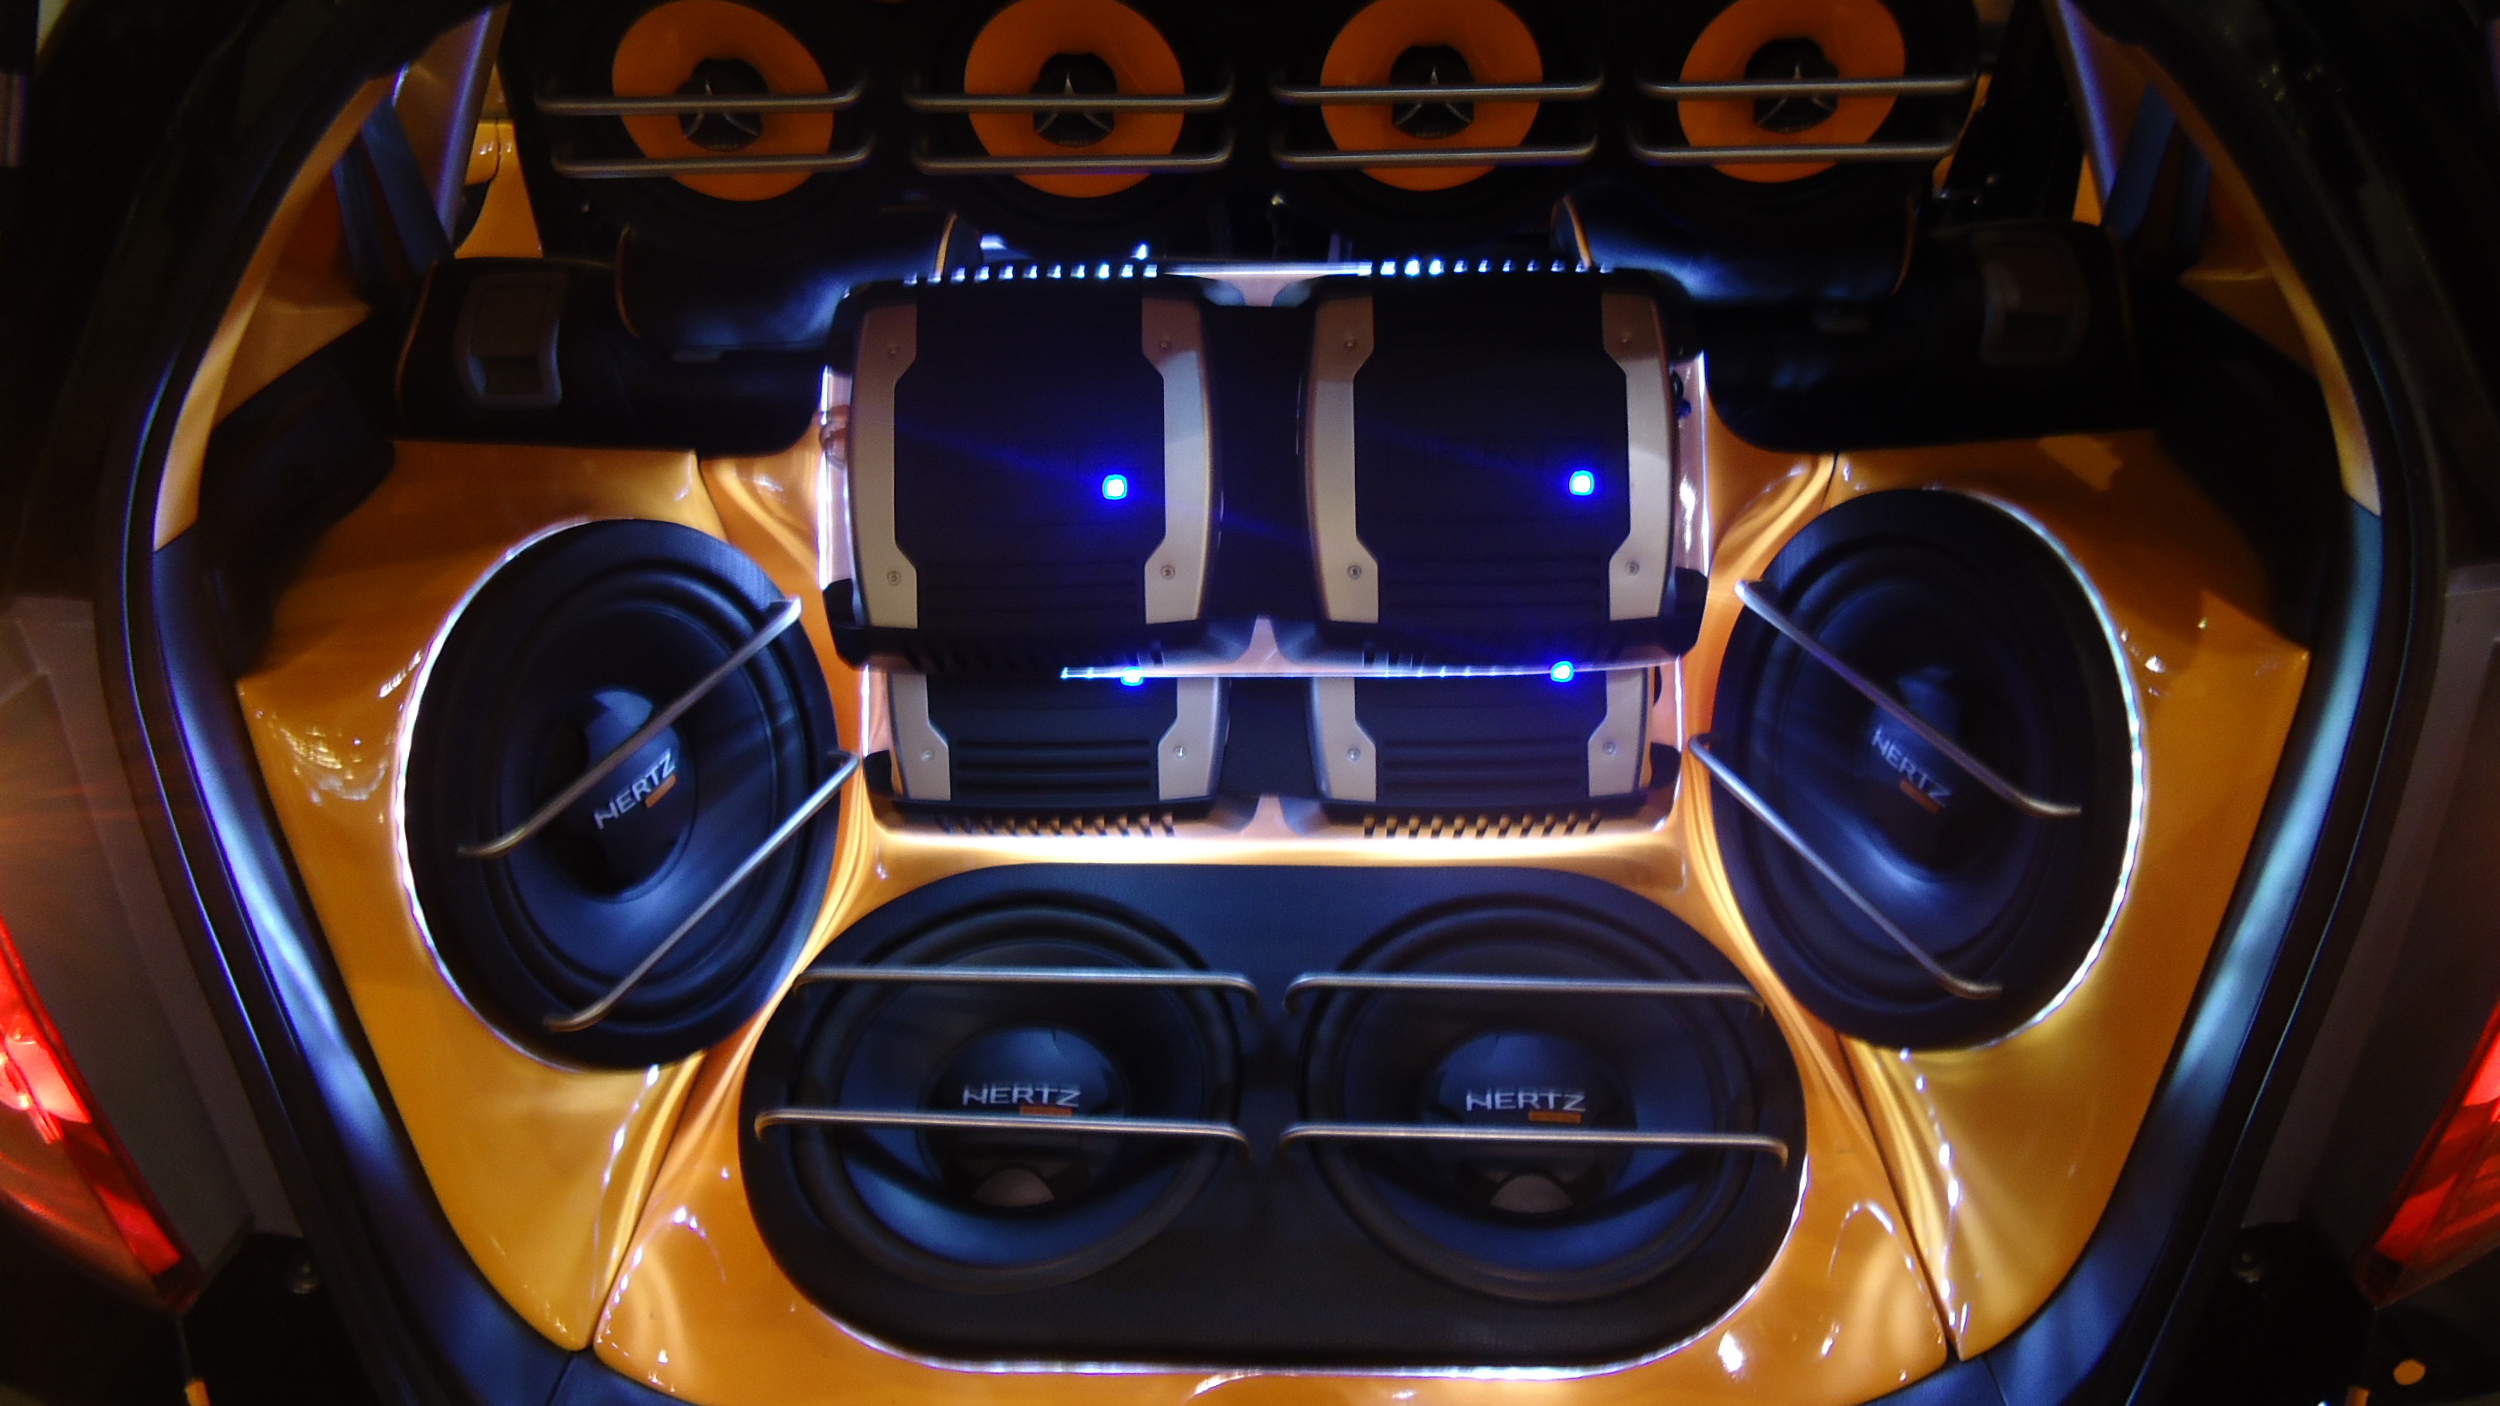 Honda Fit автозвук. Car Audio в Bentley Continental 2008 Speakers. Хонда фит SPL автозвук. Car Audio автомобильные динамики.